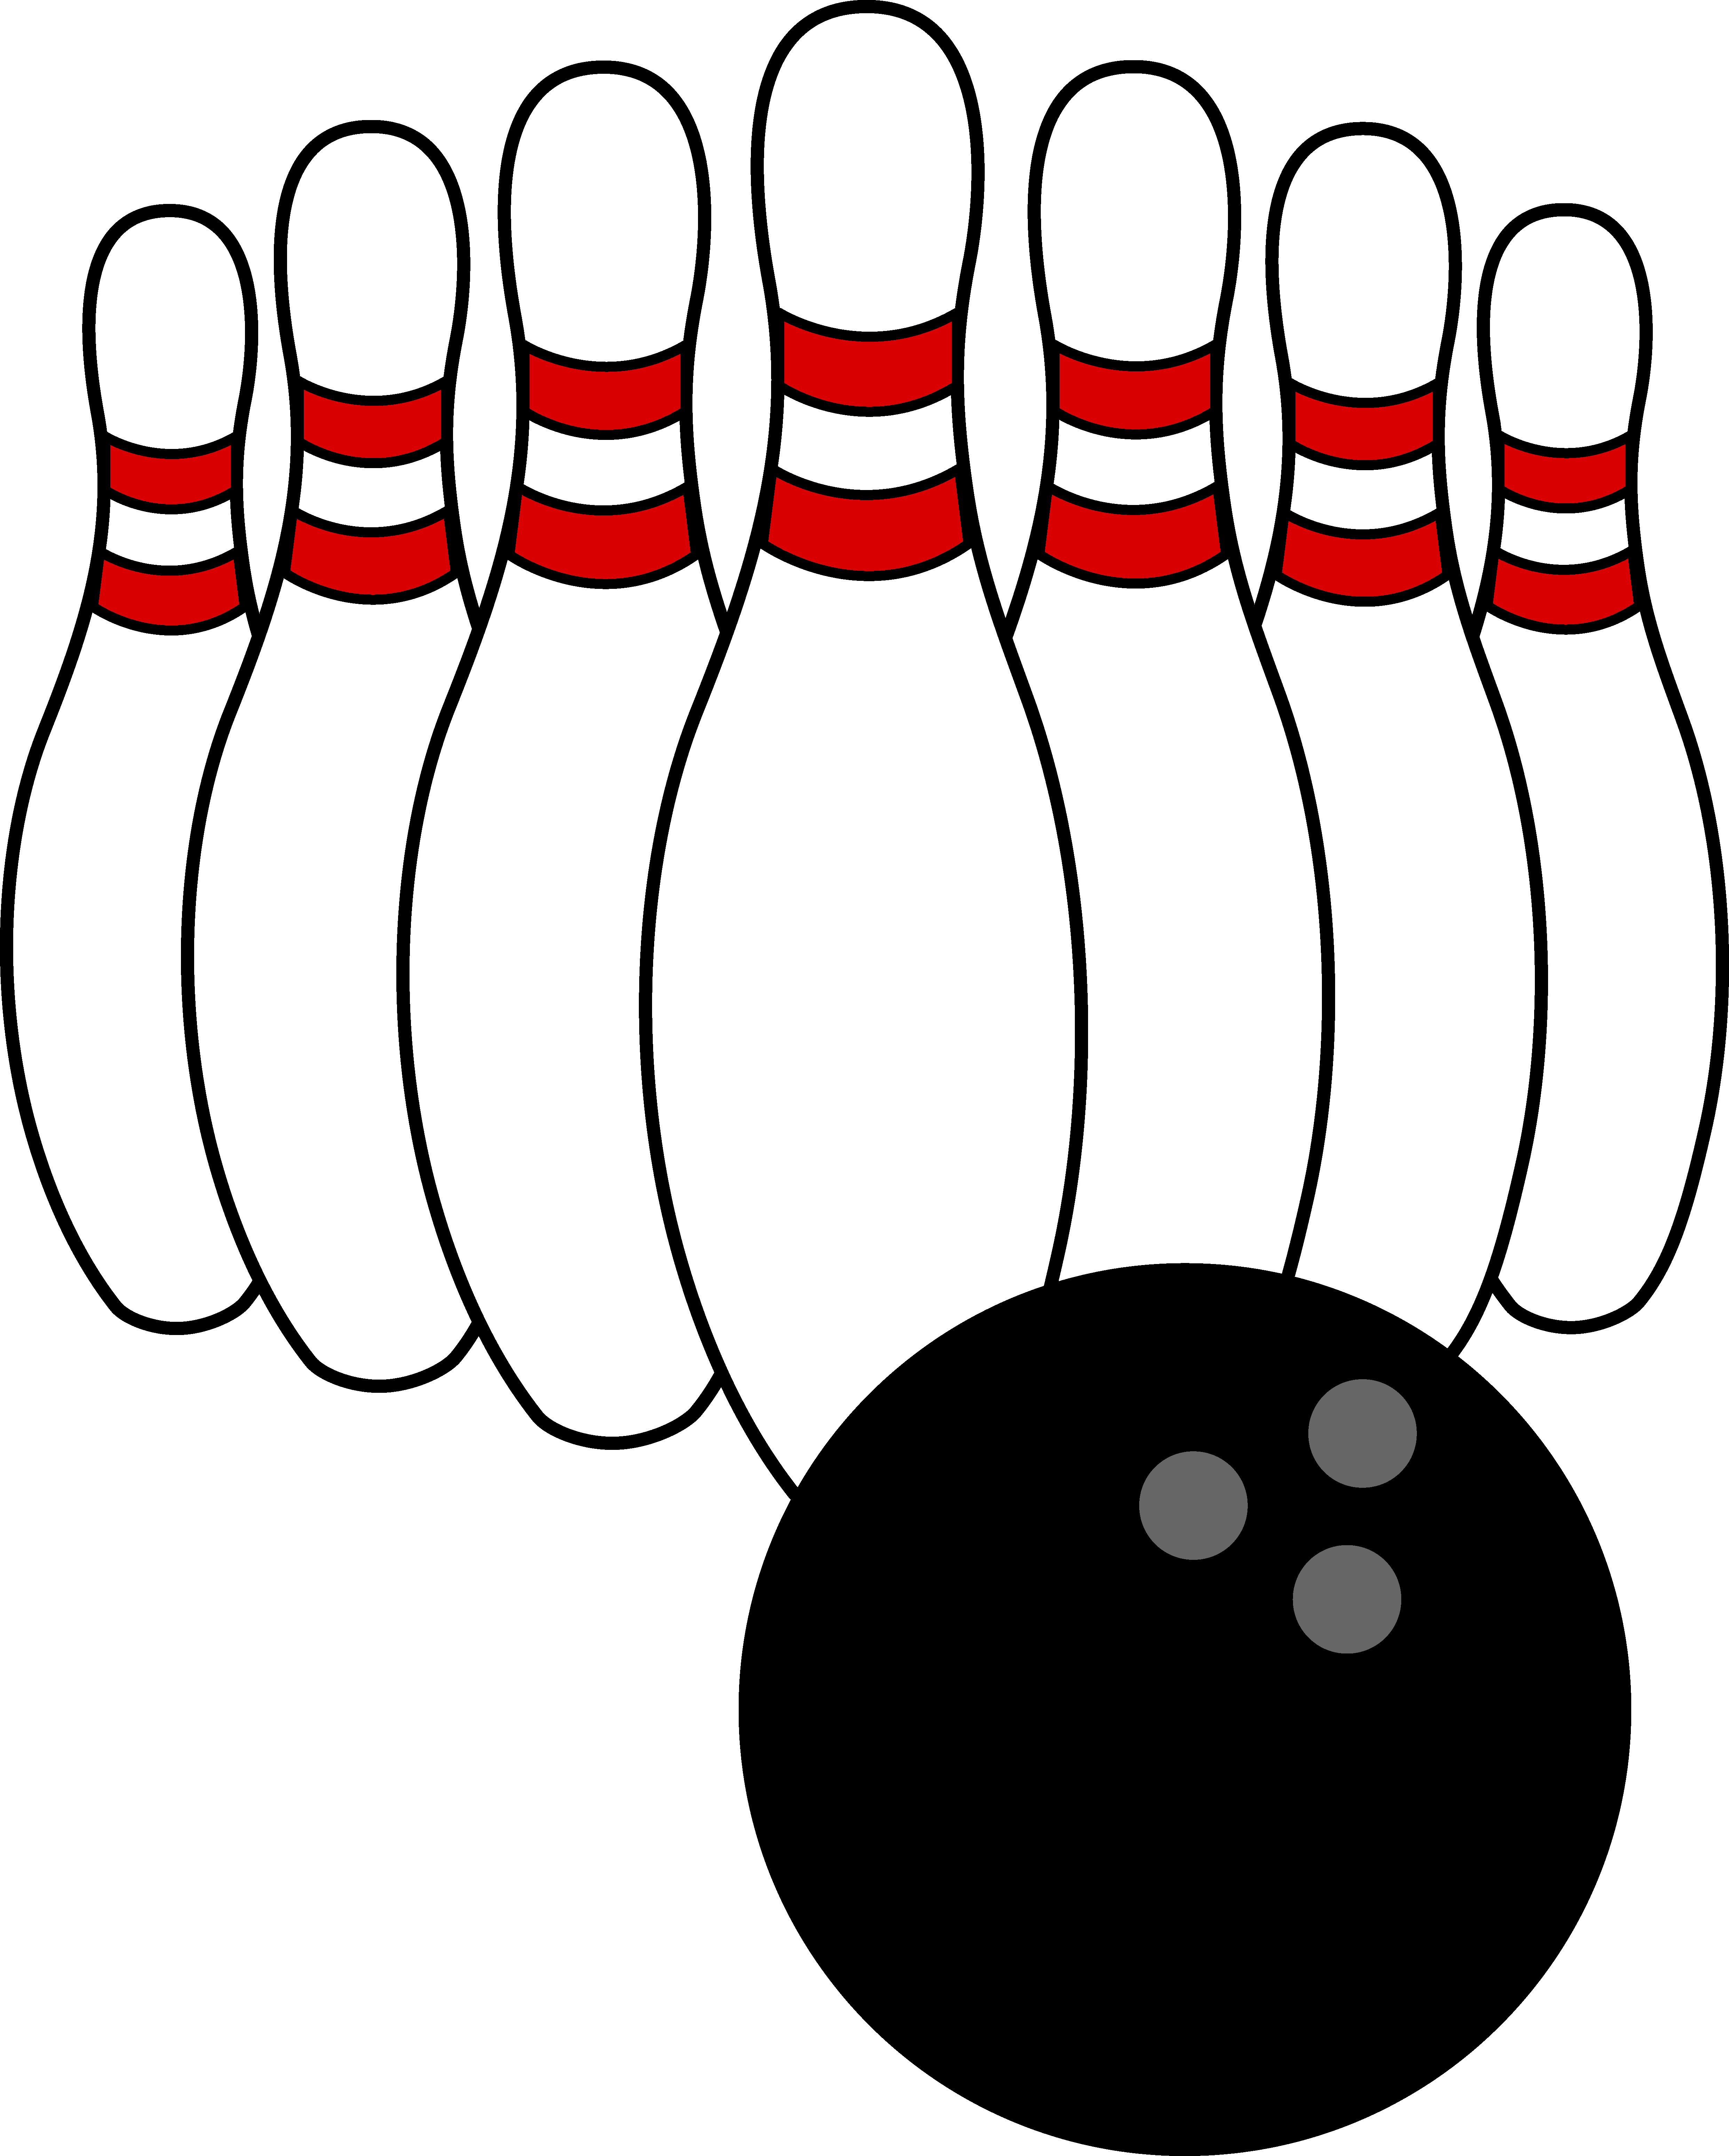 Bowling Clip Art - JoJo PixJoJo Pix